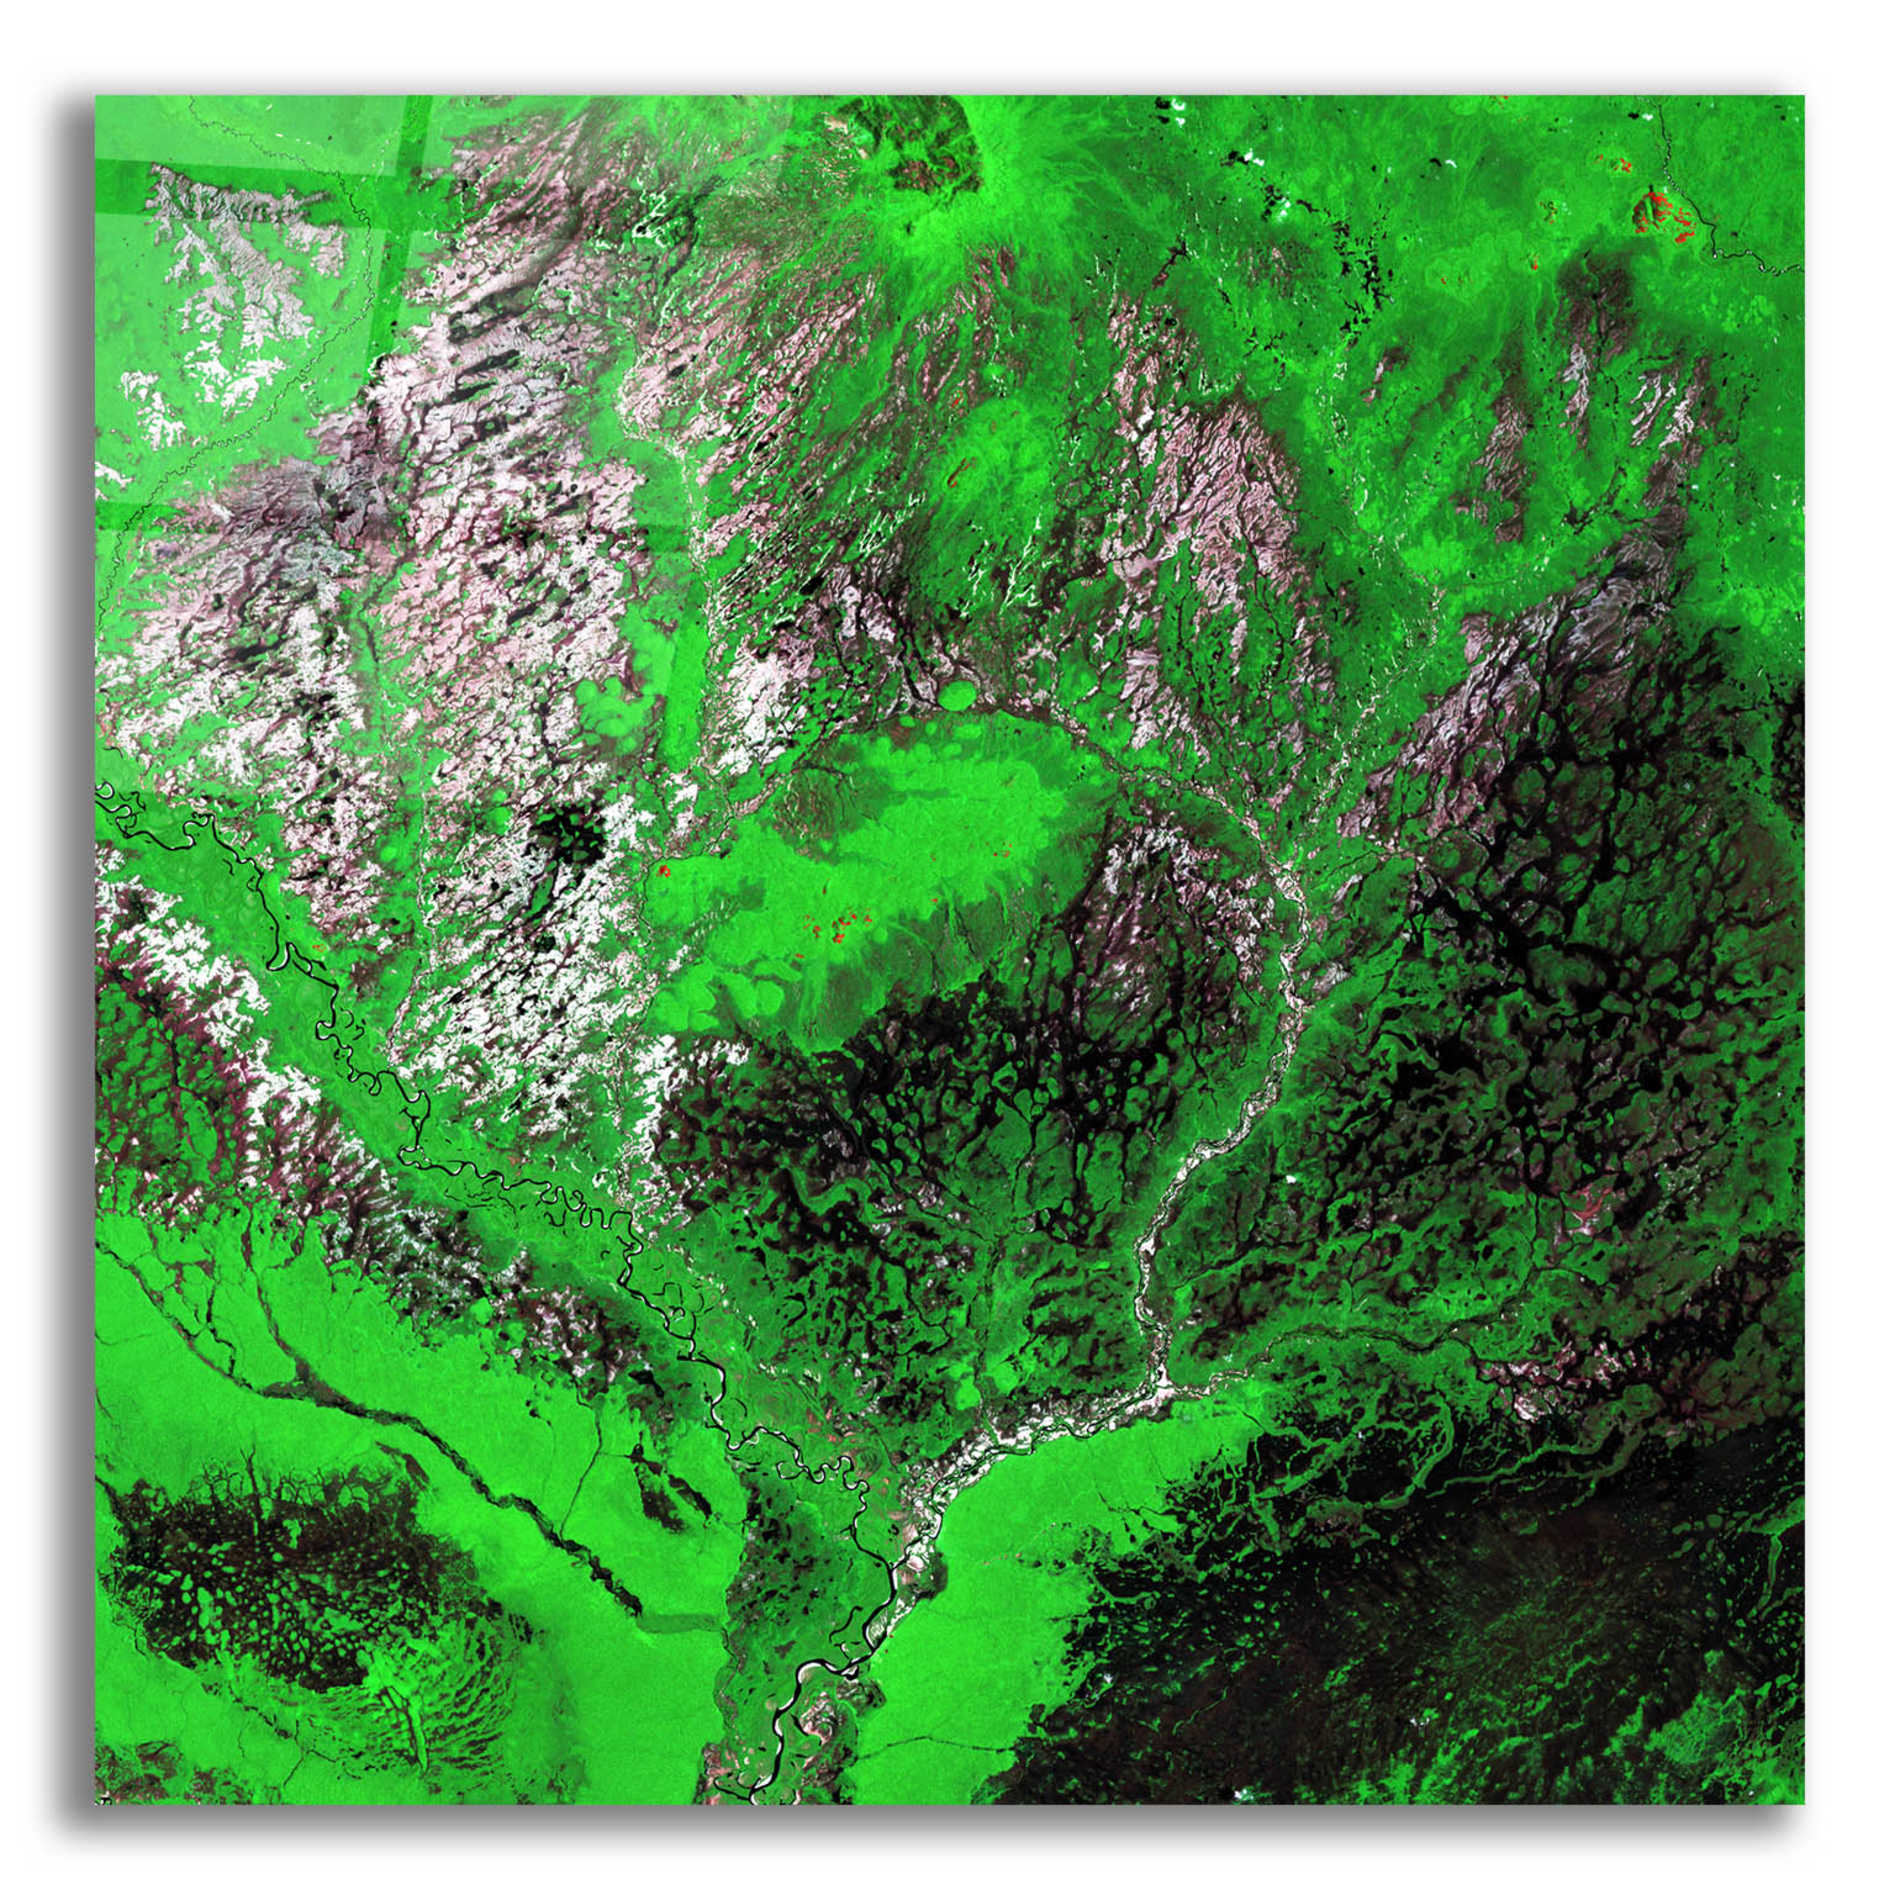 Epic Art 'Earth as Art: Araca River' Acrylic Glass Wall Art,12x12